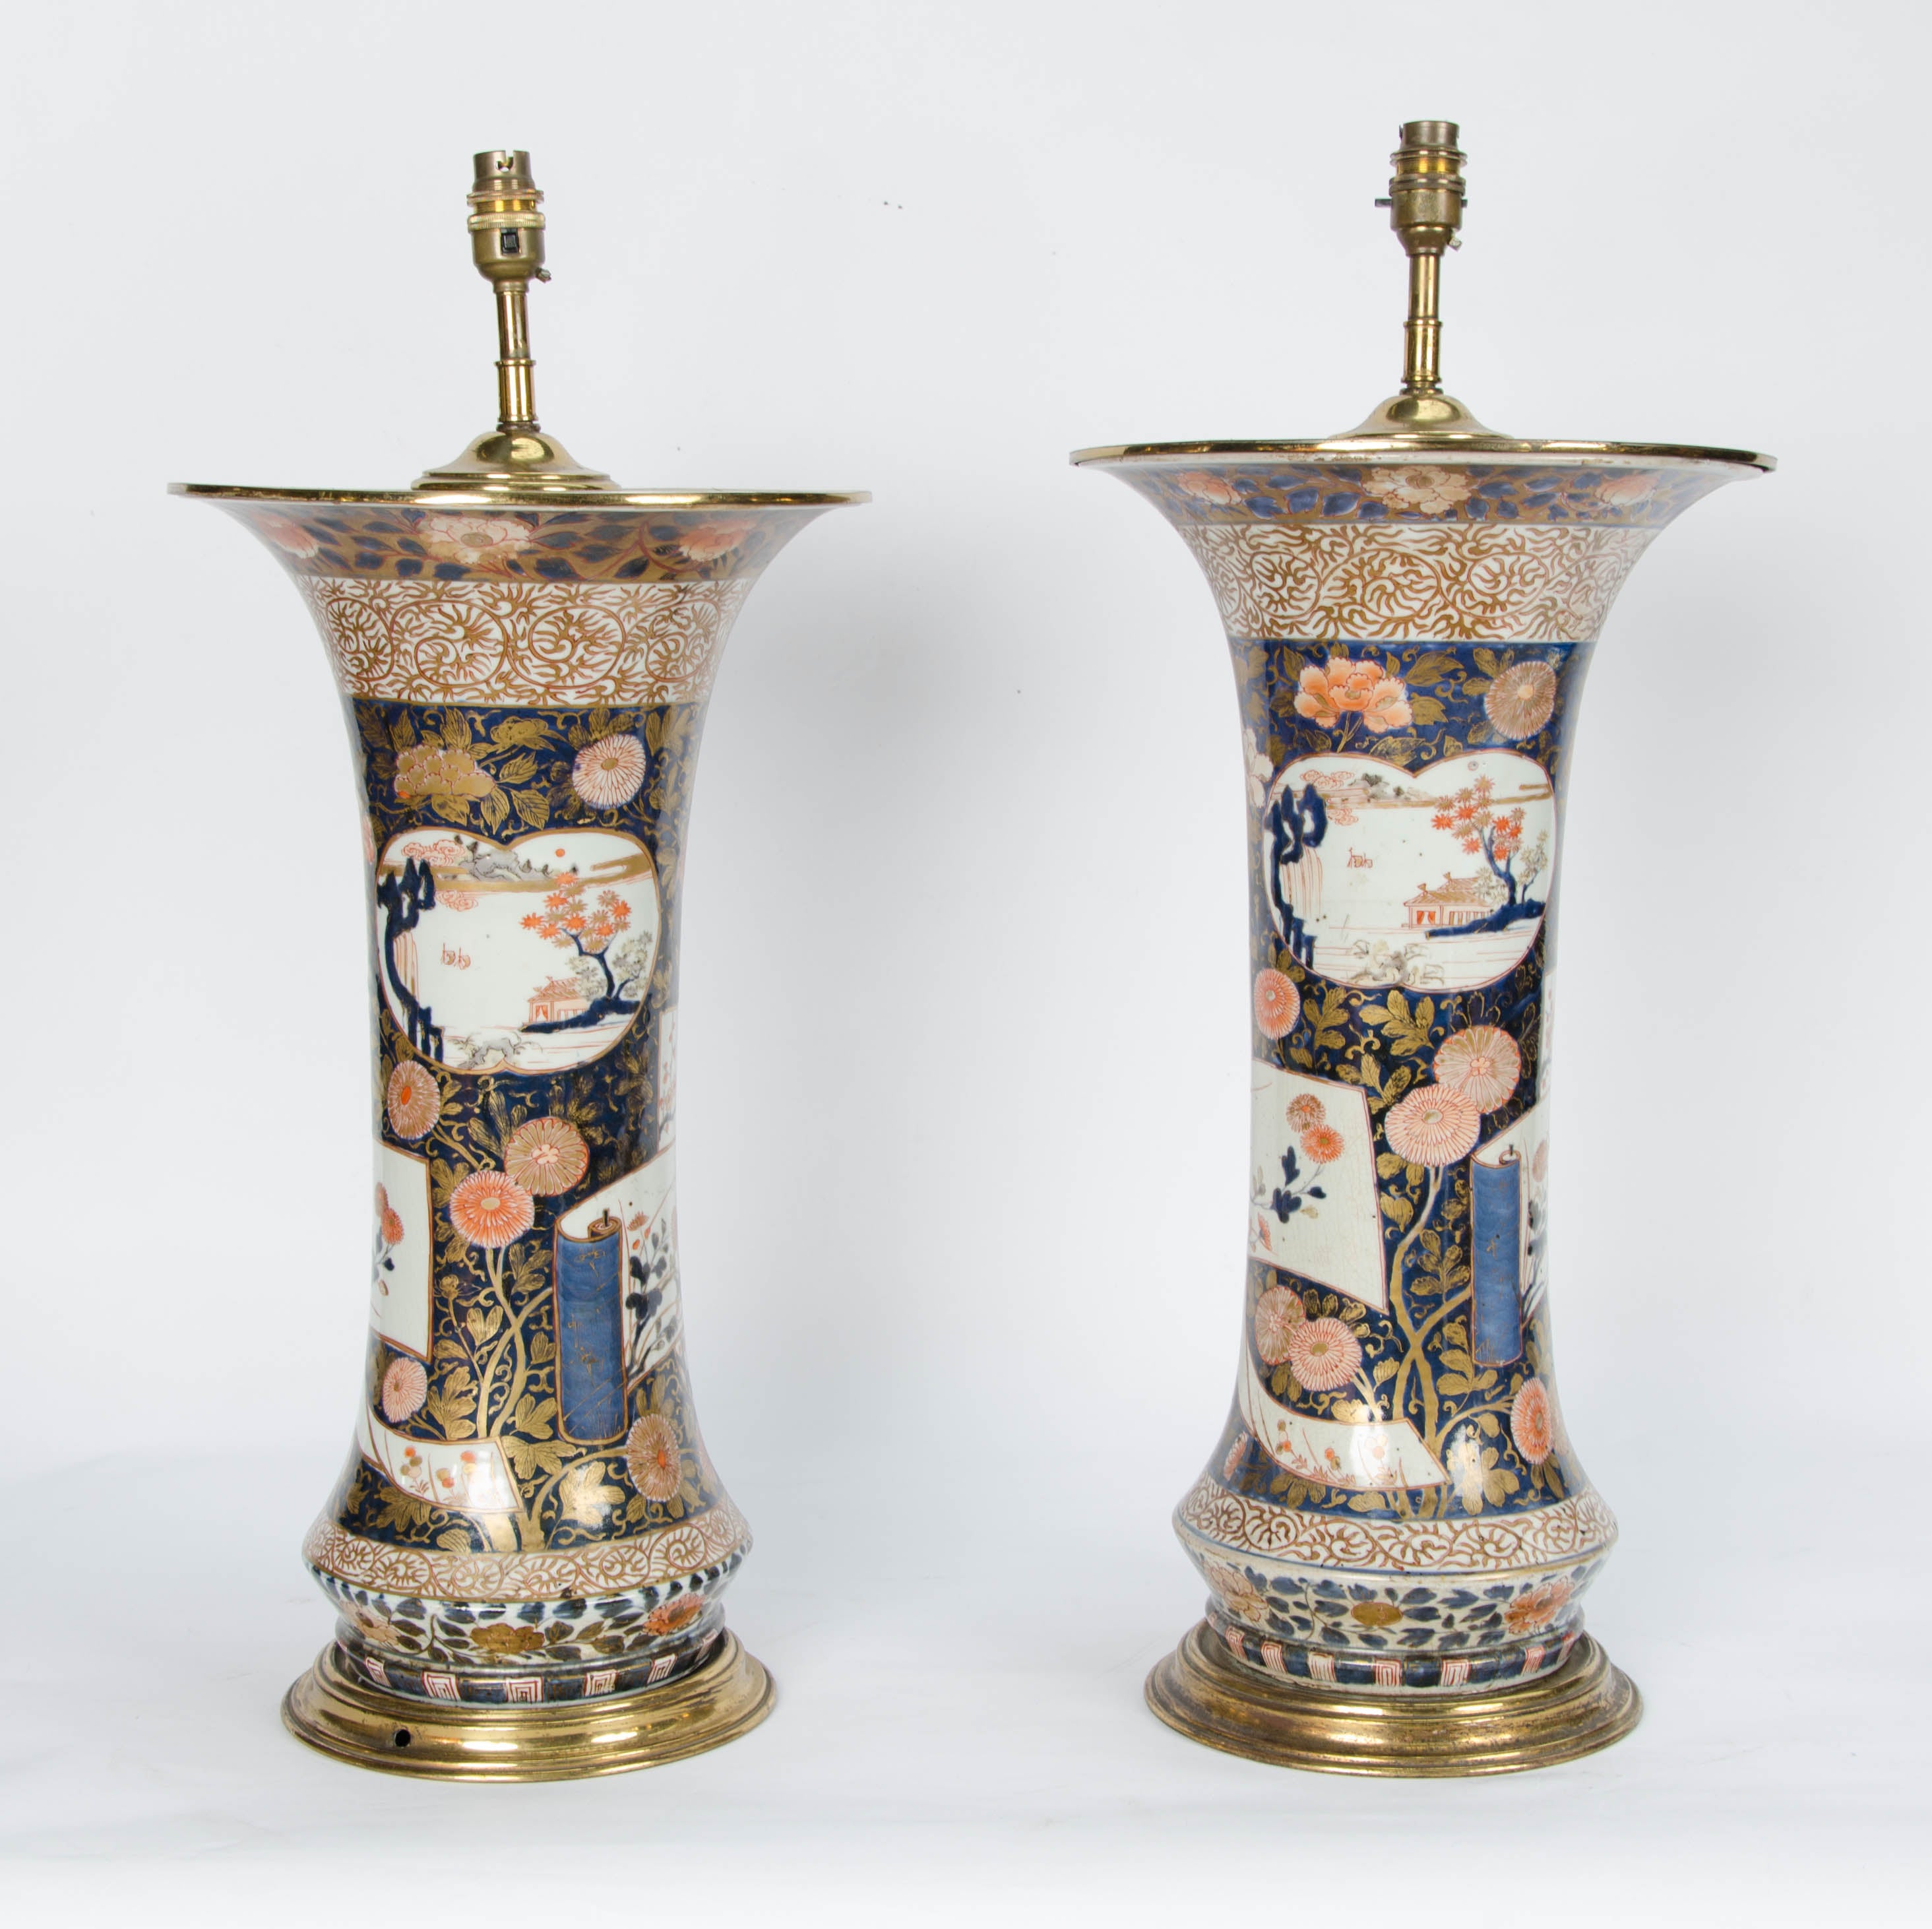 Pair of 18th Century Japanese Imari Vases Turned Lamps